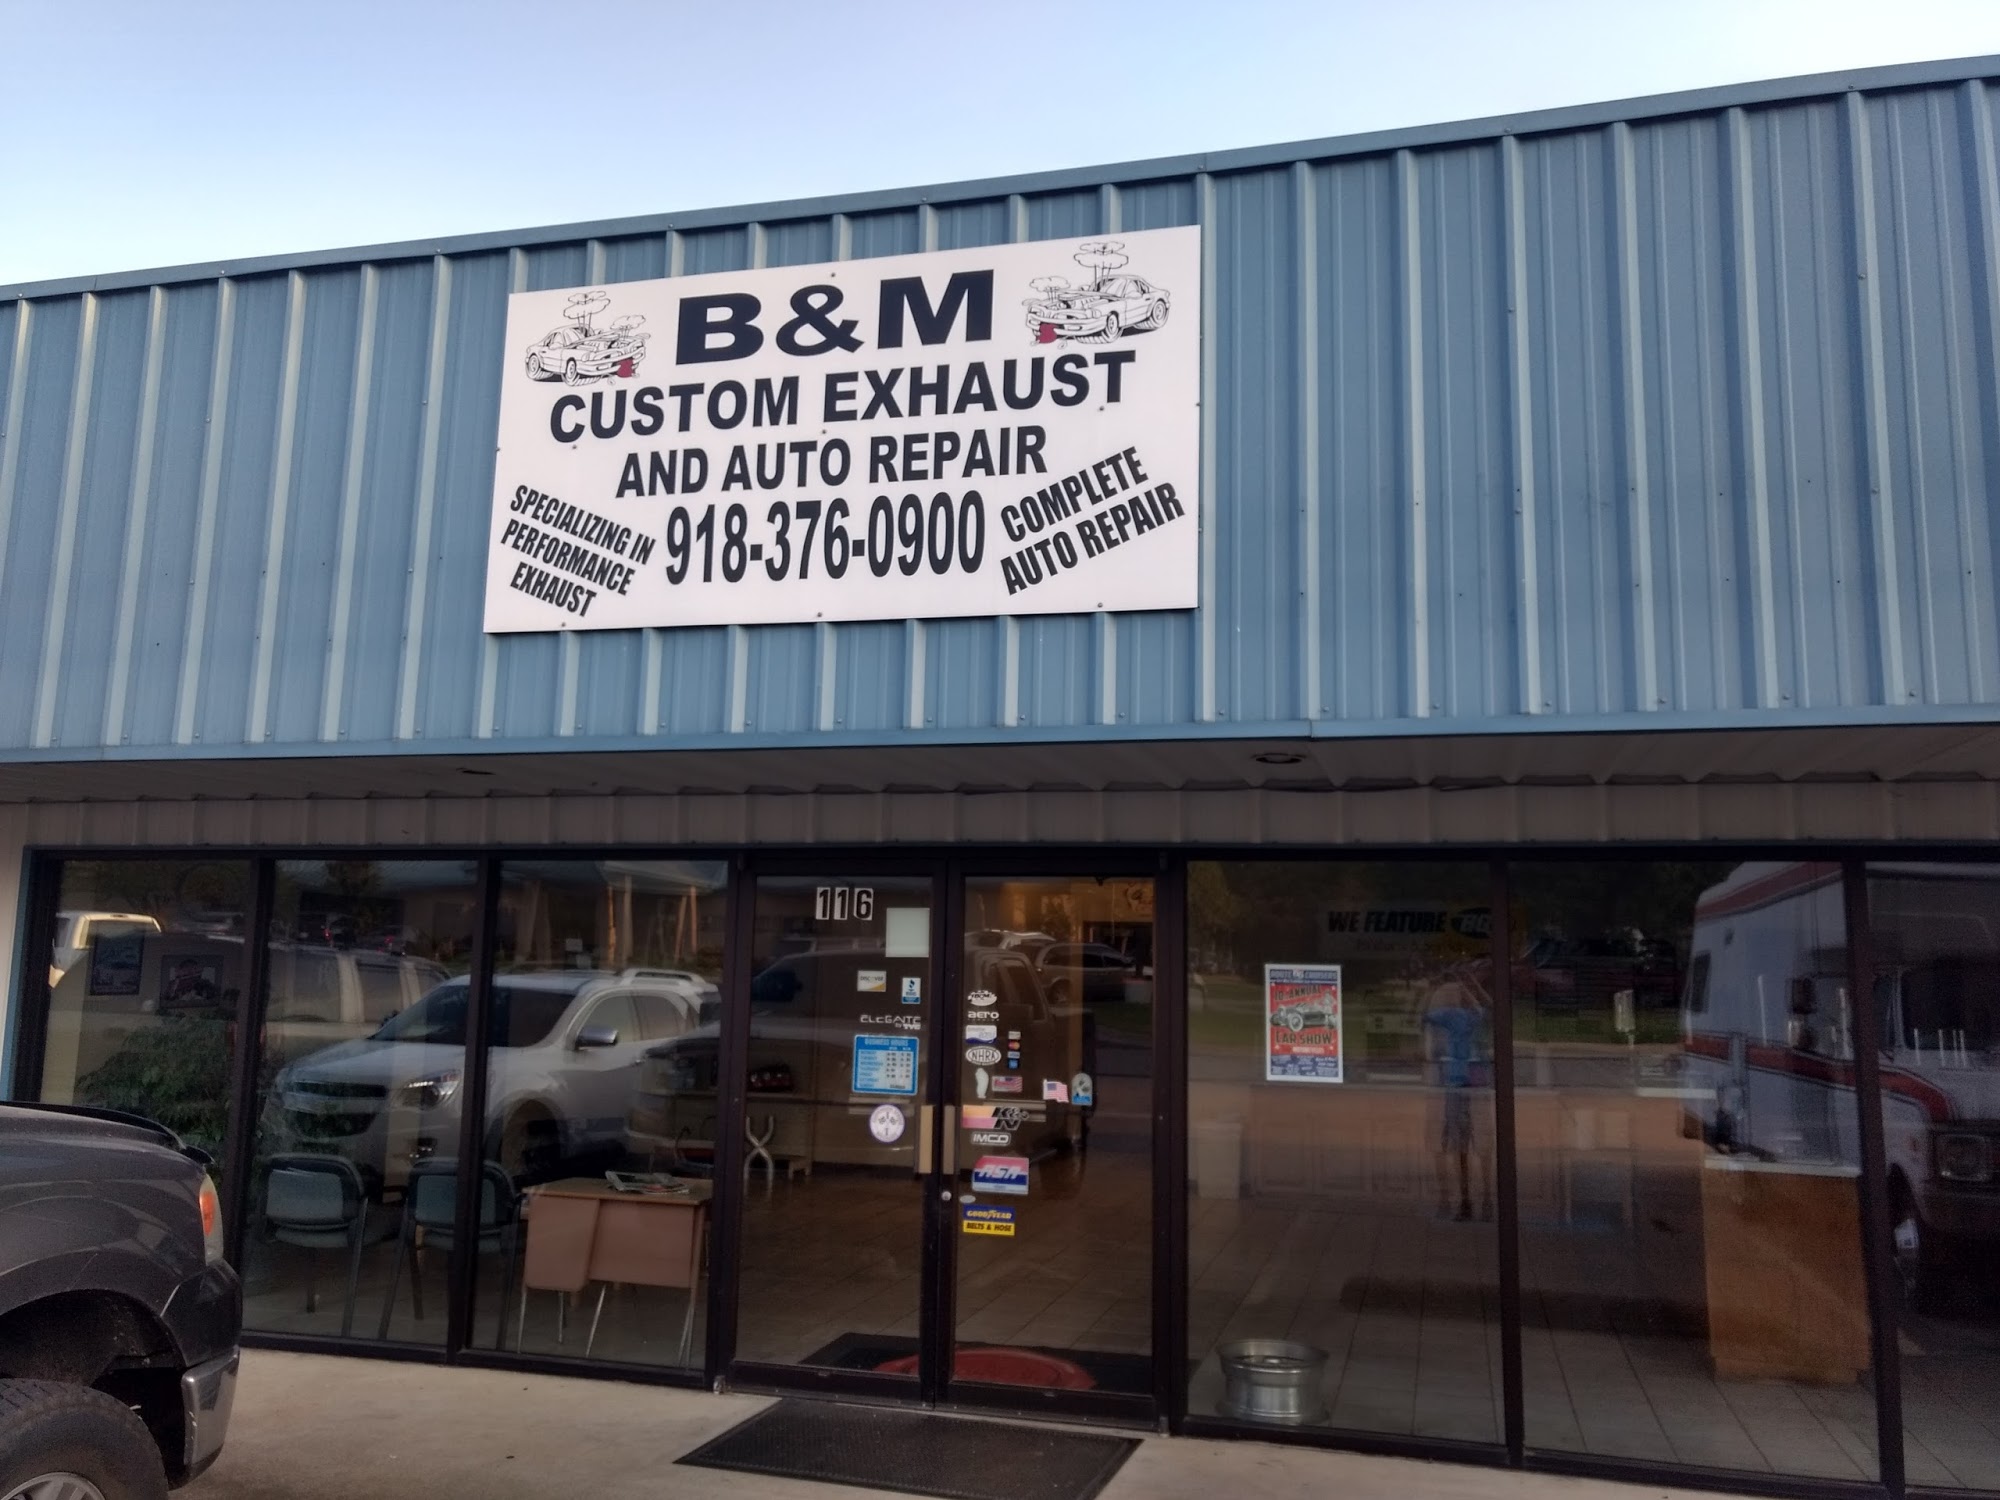 B & M Custom Exhaust and Auto Repair